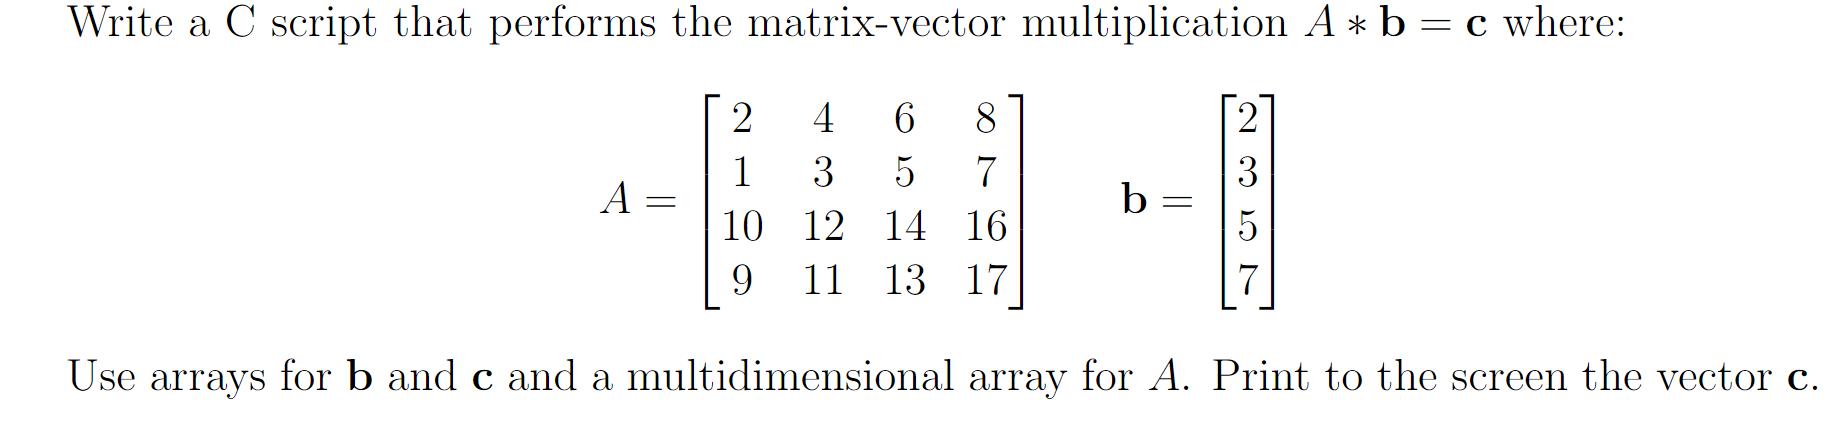 Write a C script that performs the matrix-vector multiplication A* b = c where: 4 6 8 3 5 7 12 14 16 11 13 17